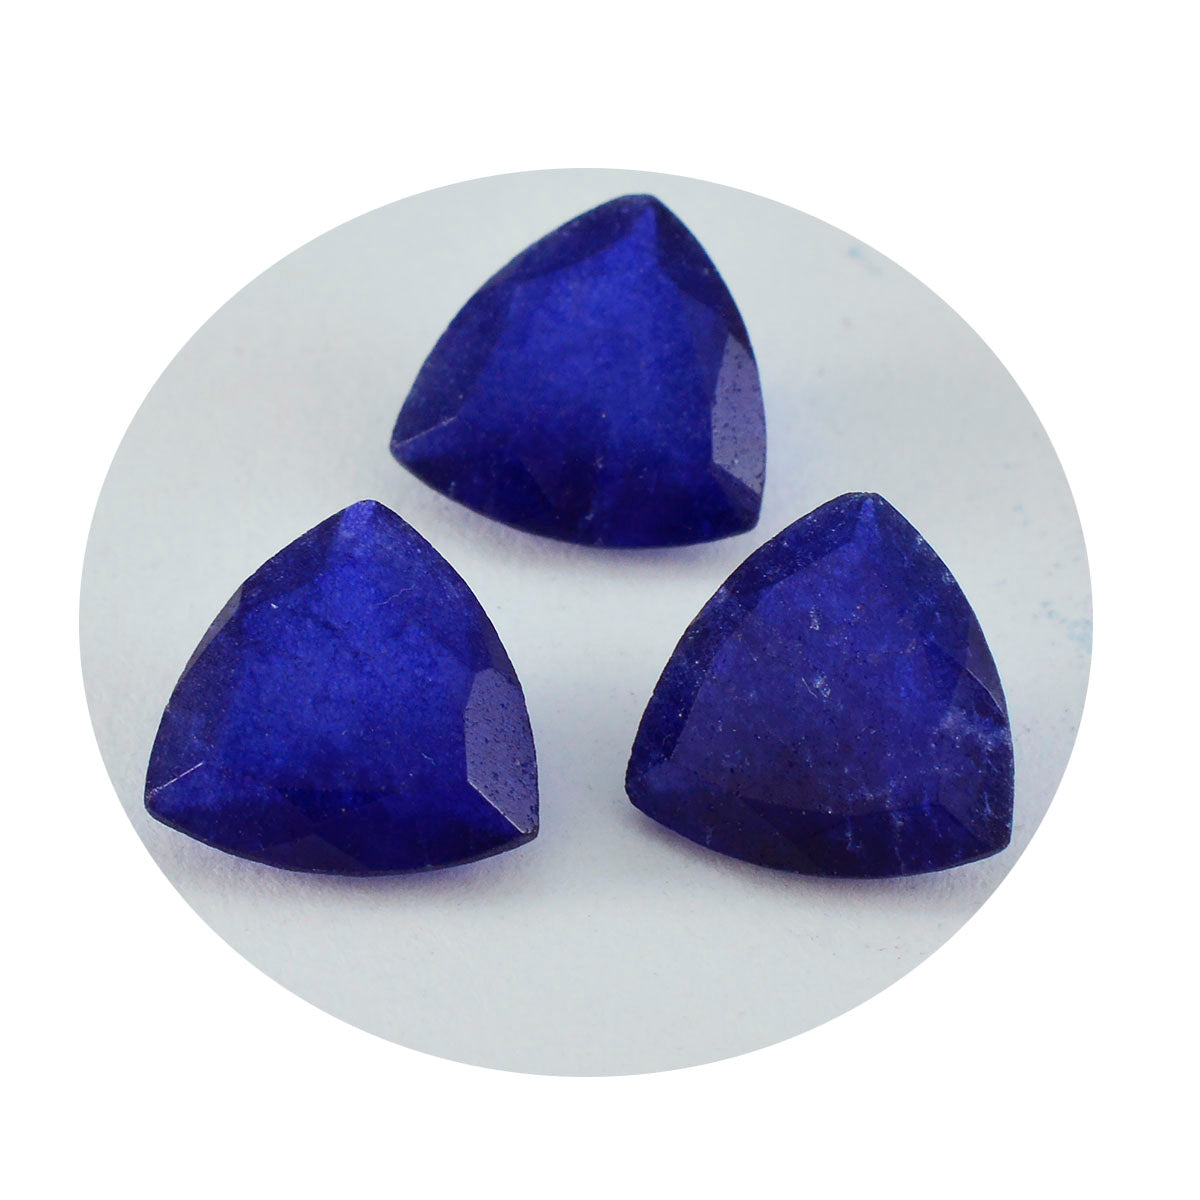 Riyogems 1PC Natural Blue Jasper Faceted 12X12 mm Trillion Shape startling Quality Stone